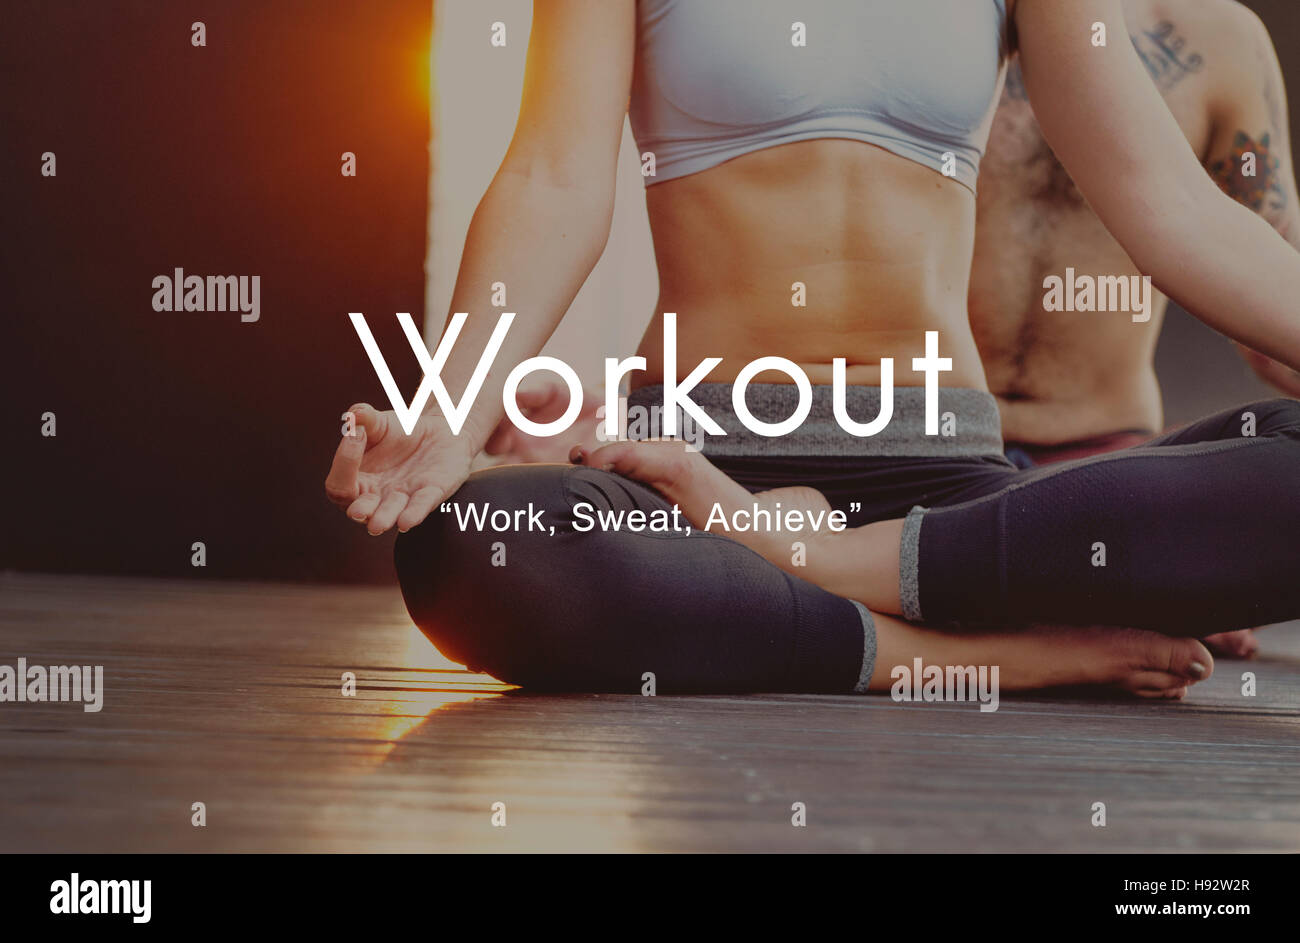 Workout Exercise Physical Activity Training Cardio Concept Stock Photo